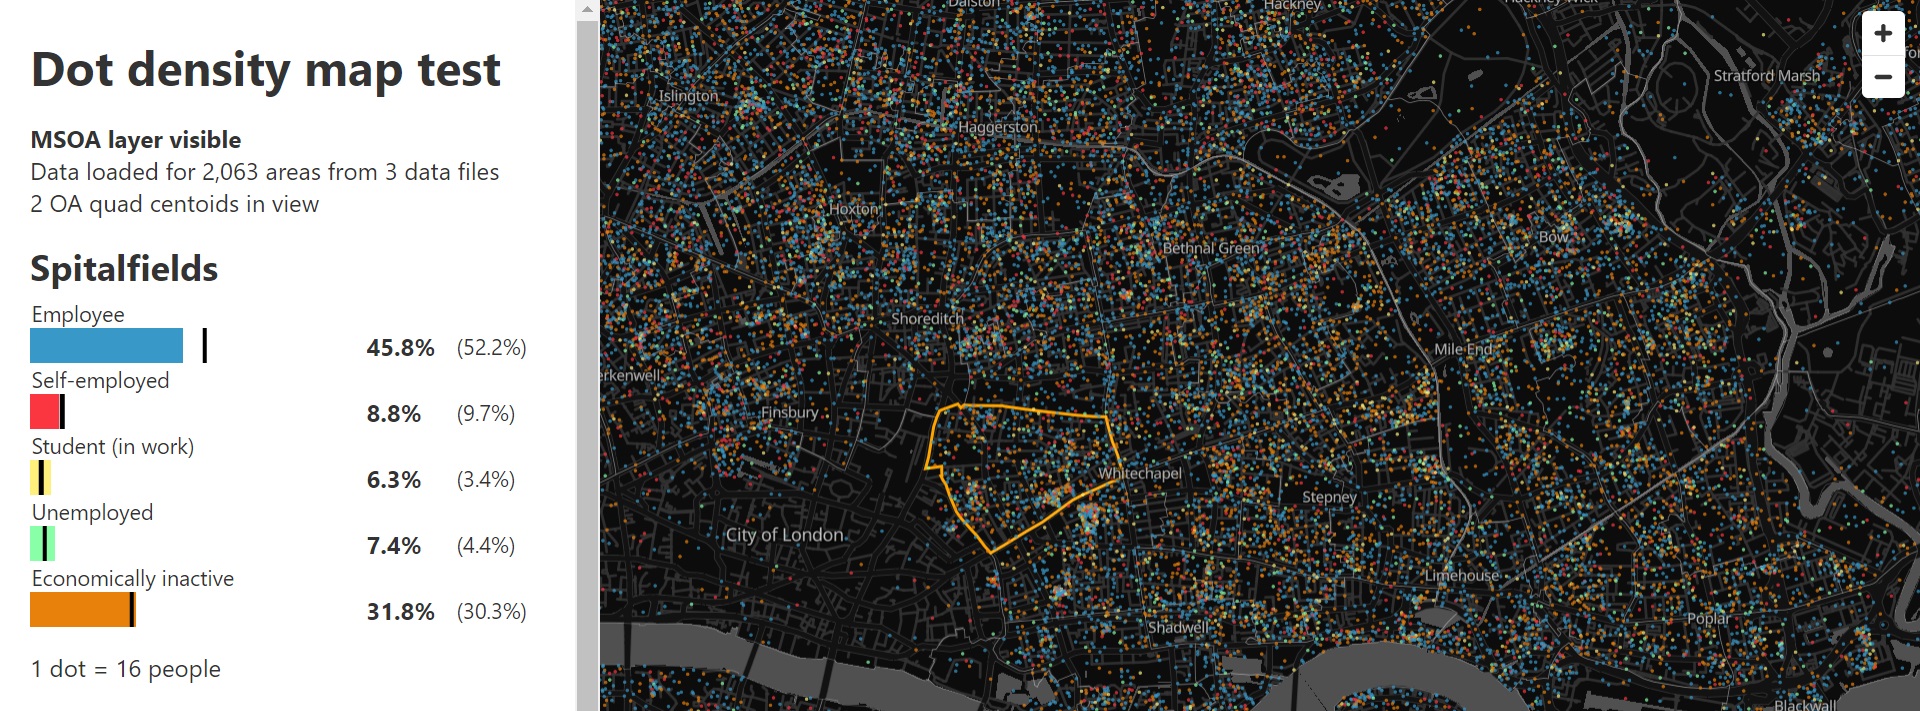 Dot density map example